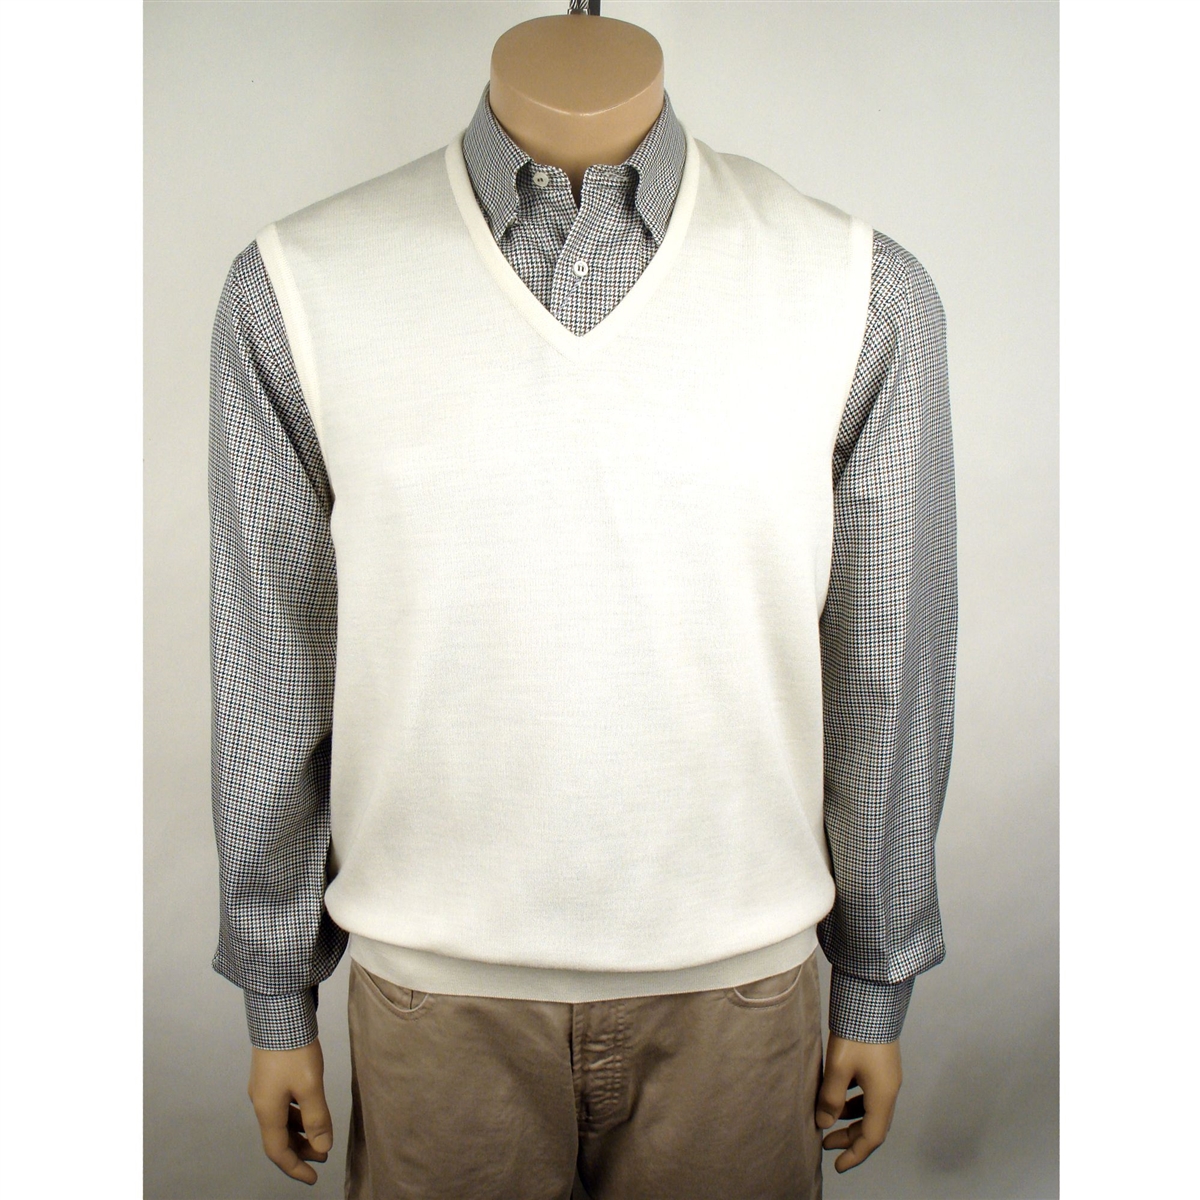 Classic Merino Wool Pullover Vest in White by St. Croix - Hansen's